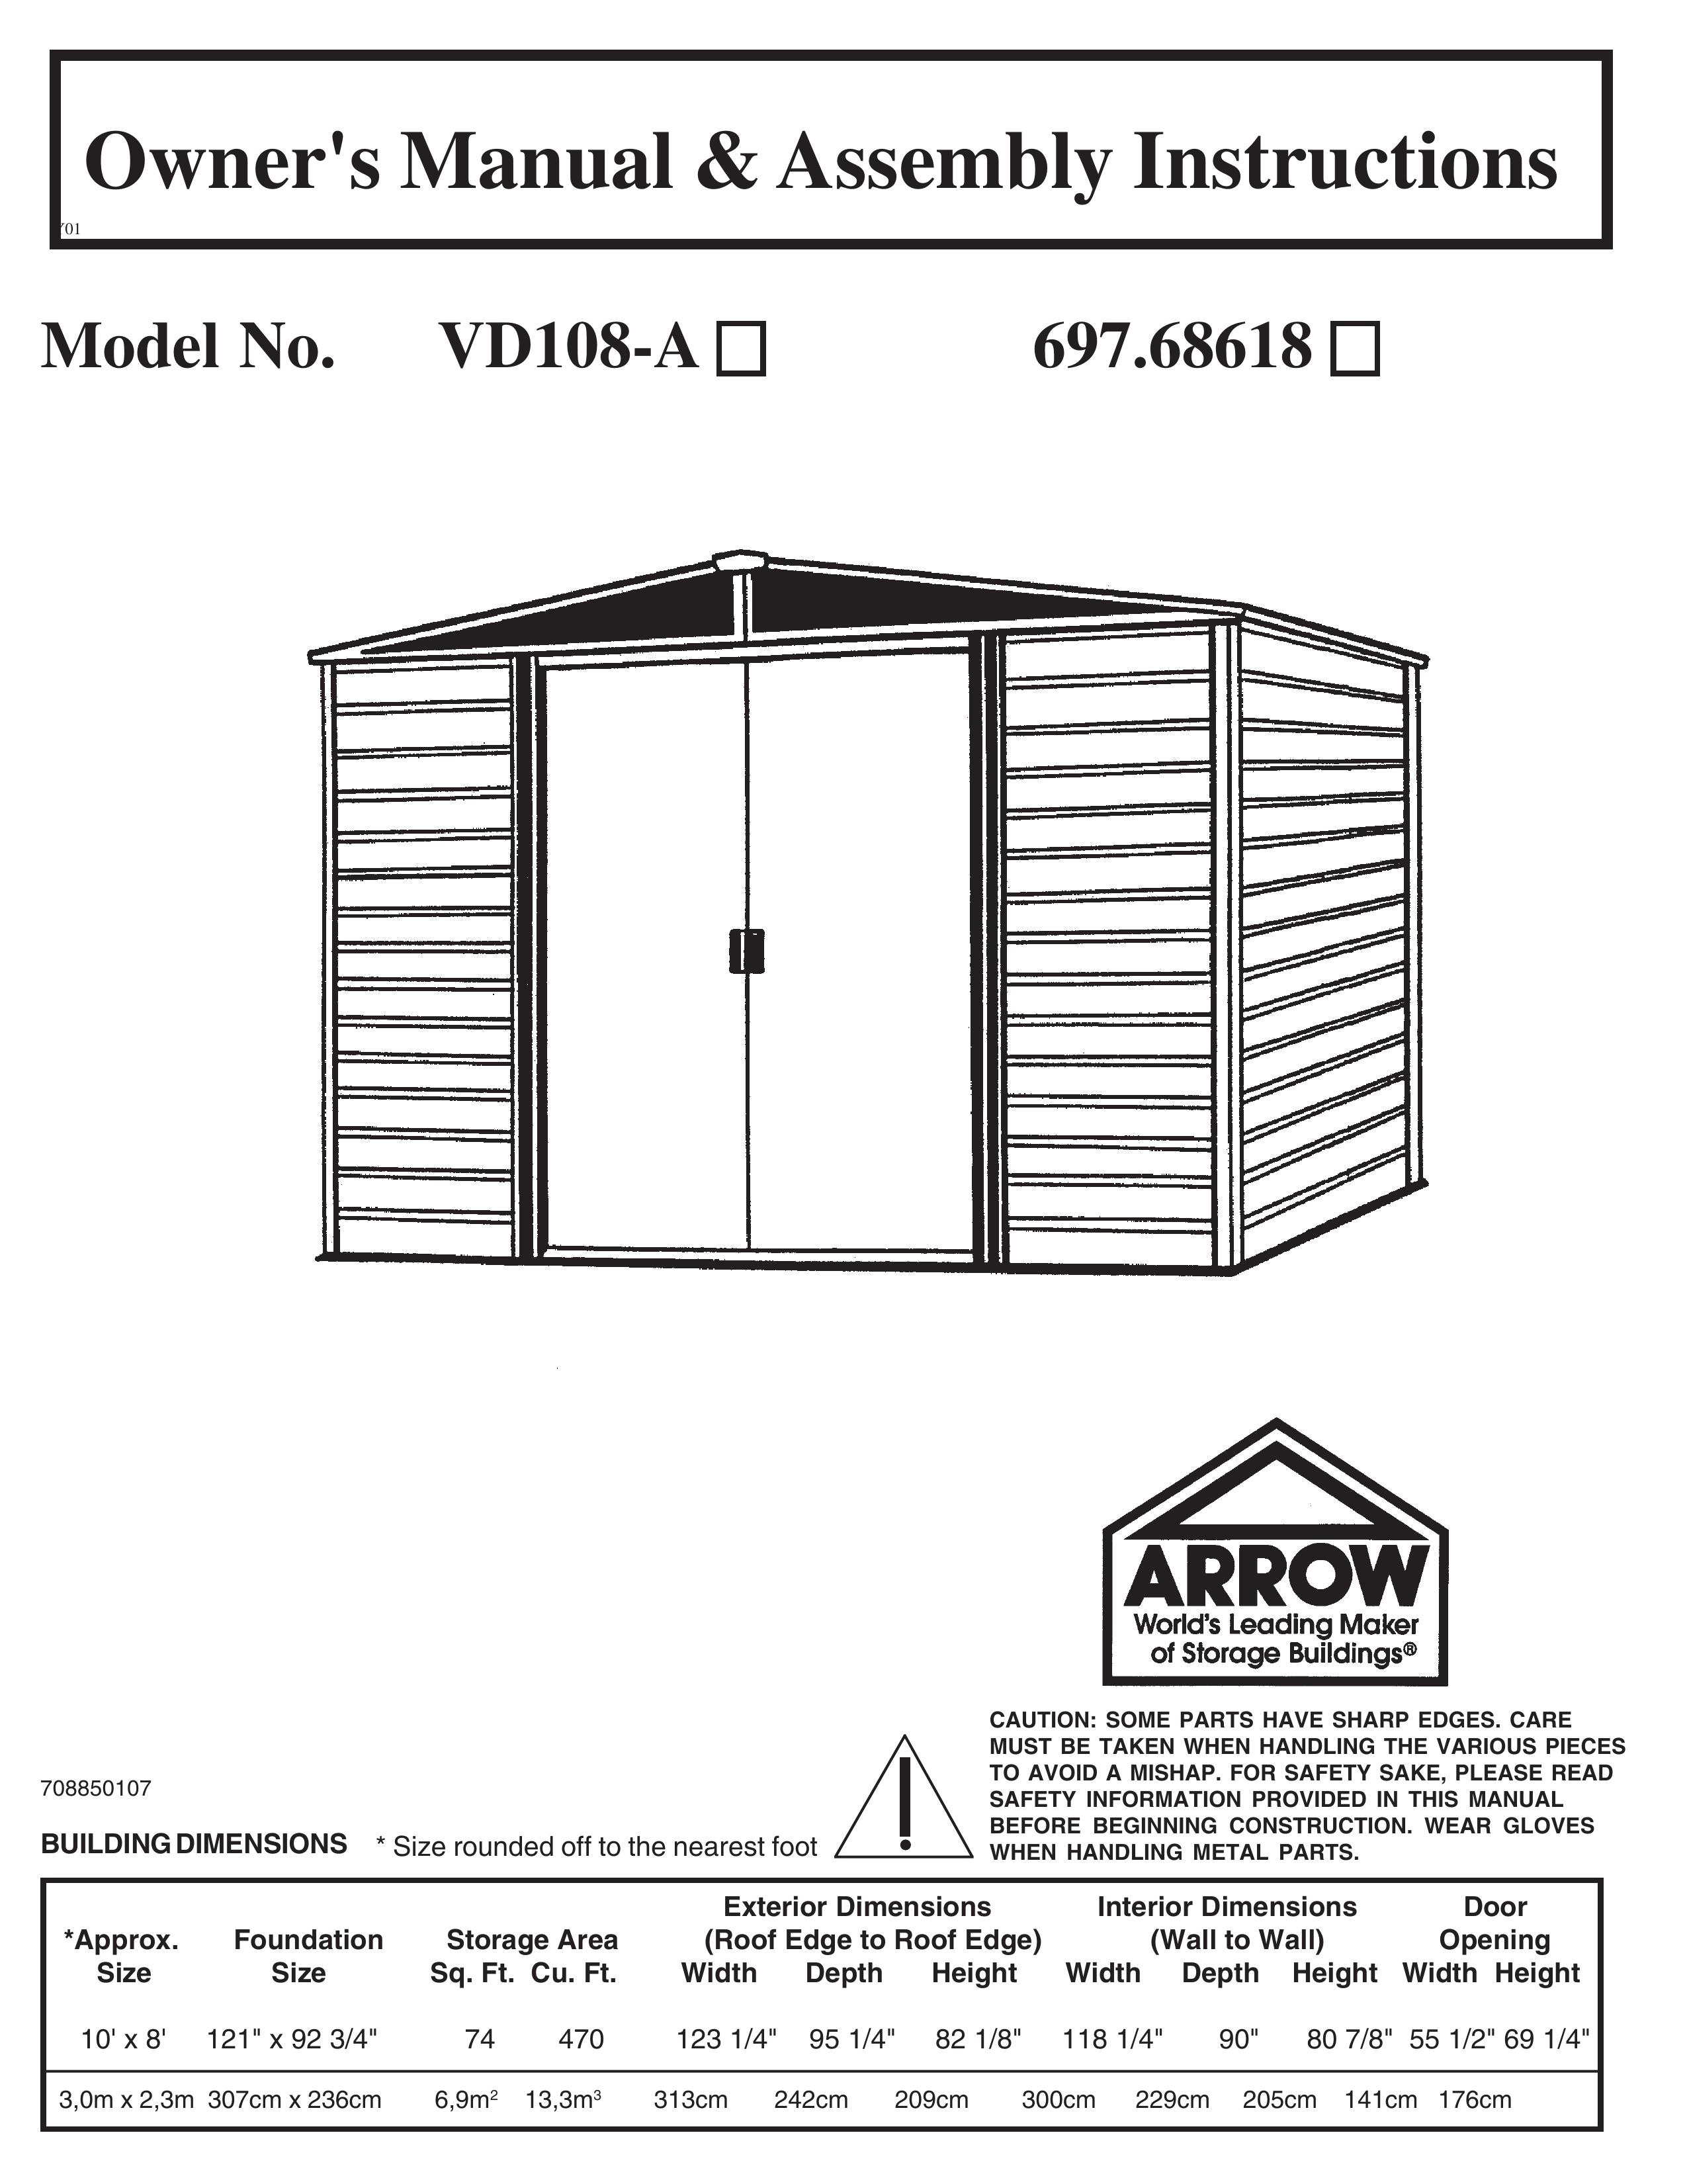 Arrow Fastener VD108-A 697.68618 Outdoor Storage User Manual